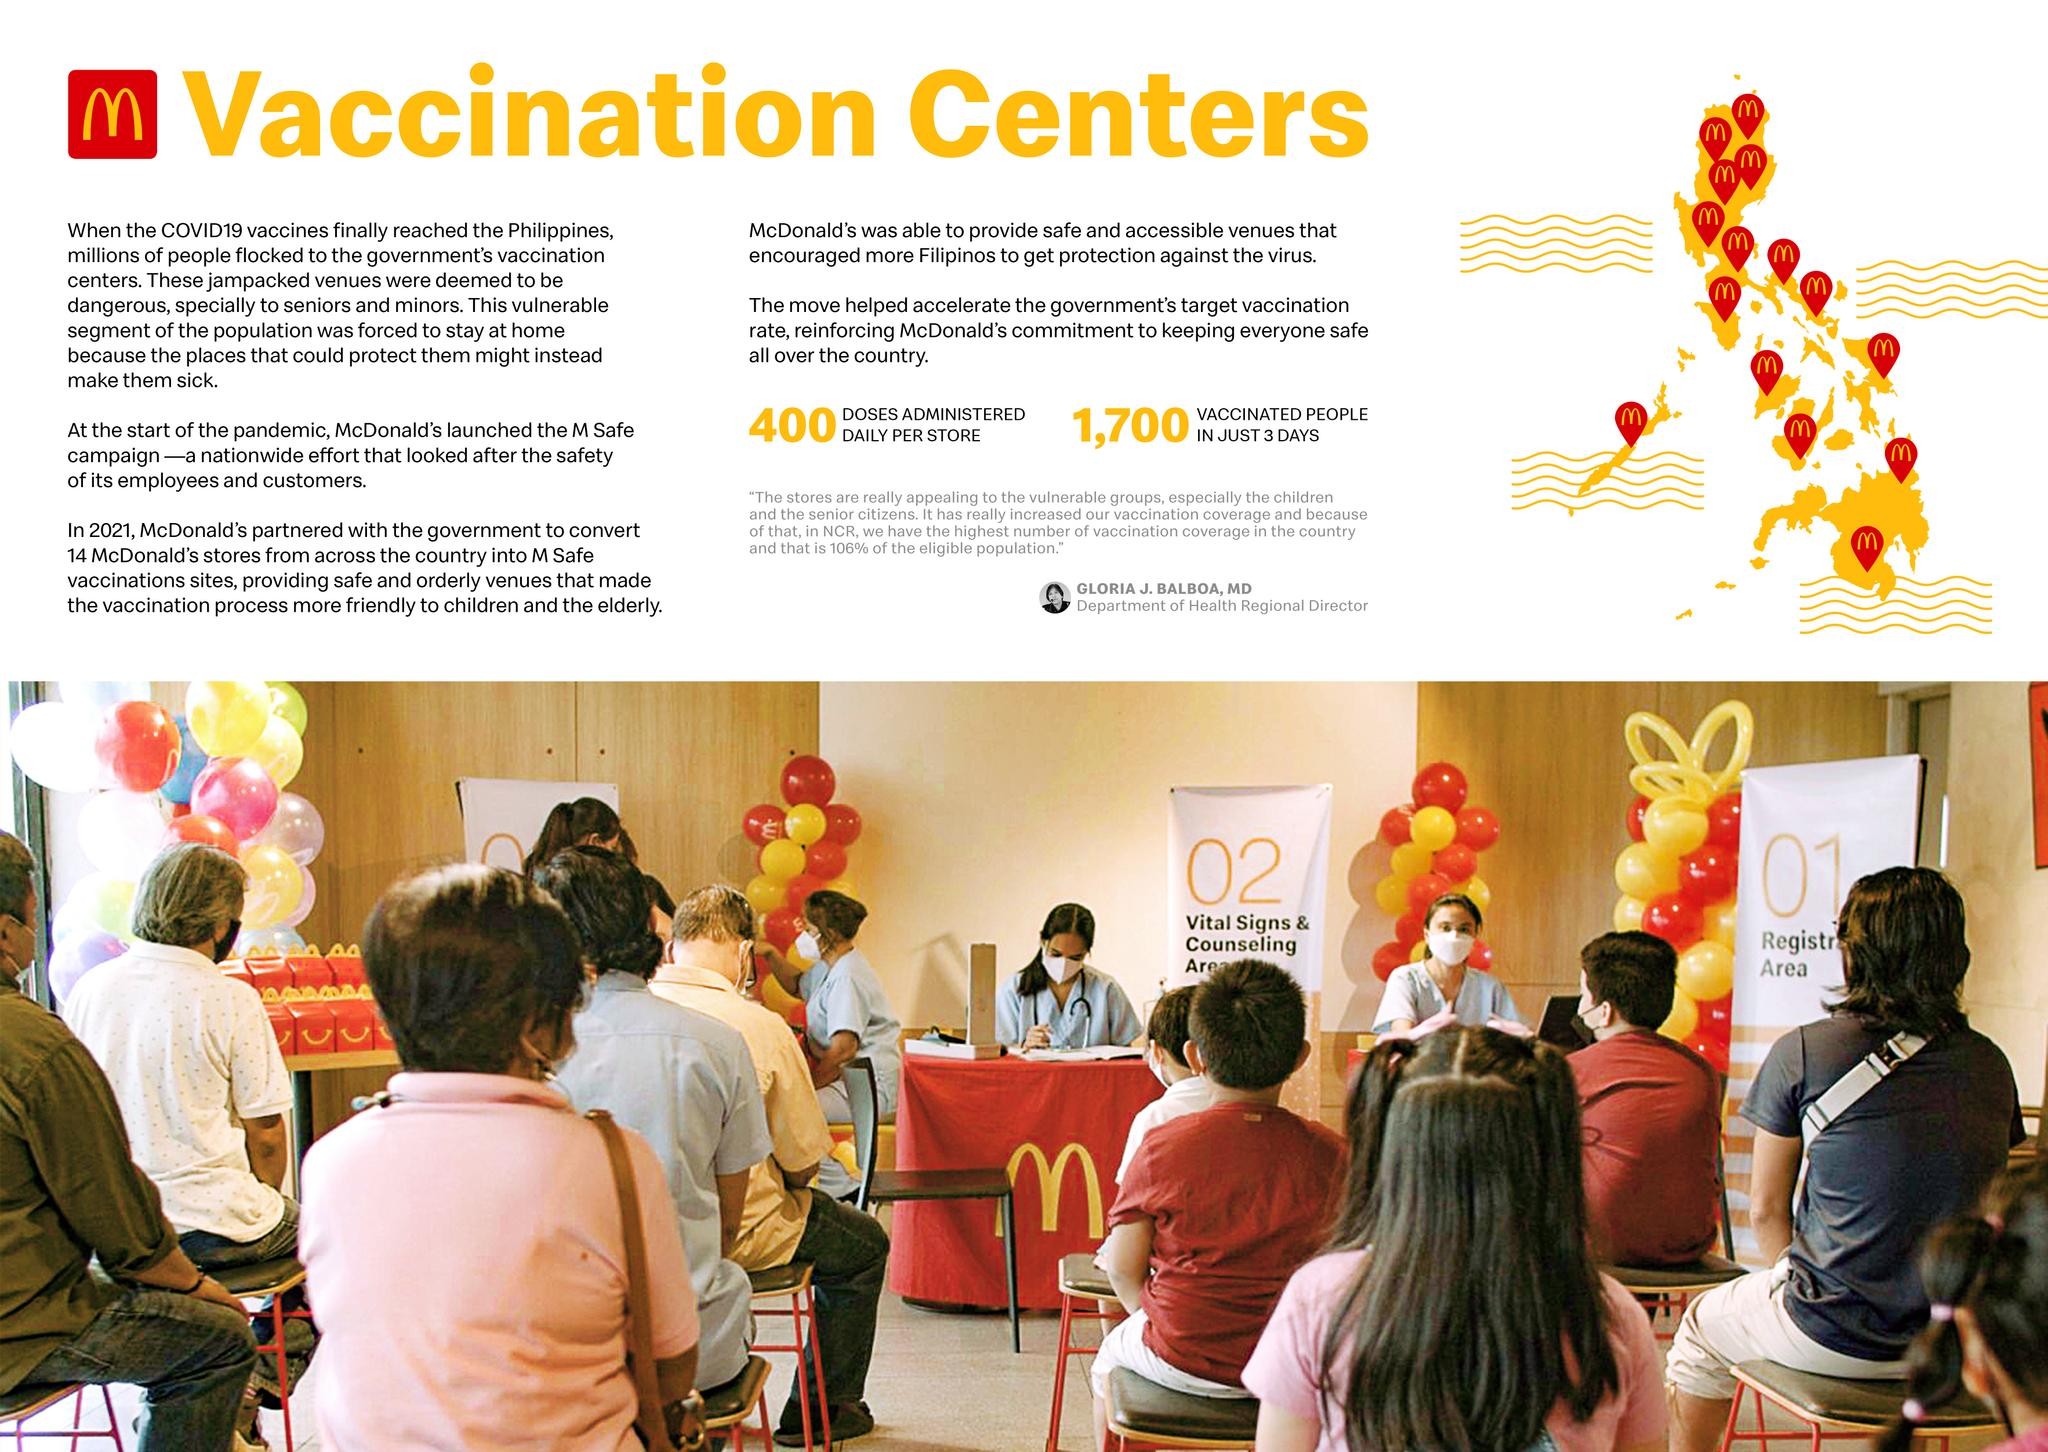 McDonald's Vaccination Centers